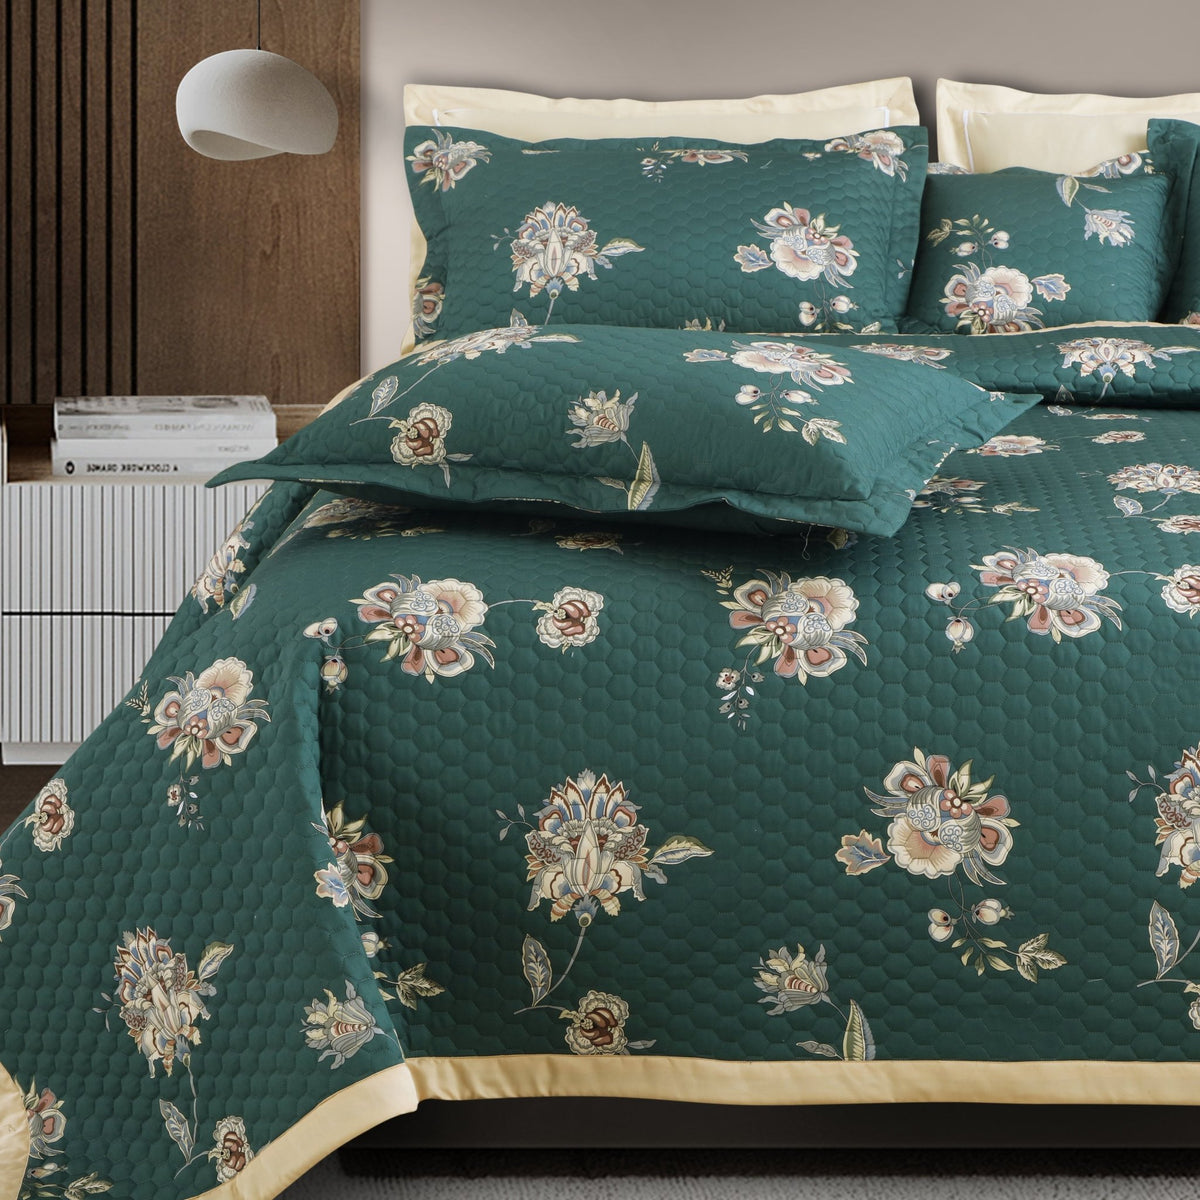 Malako Royale 100% Cotton Green Botanic King Size 5 Piece Quilted Bedspread Set - MALAKO